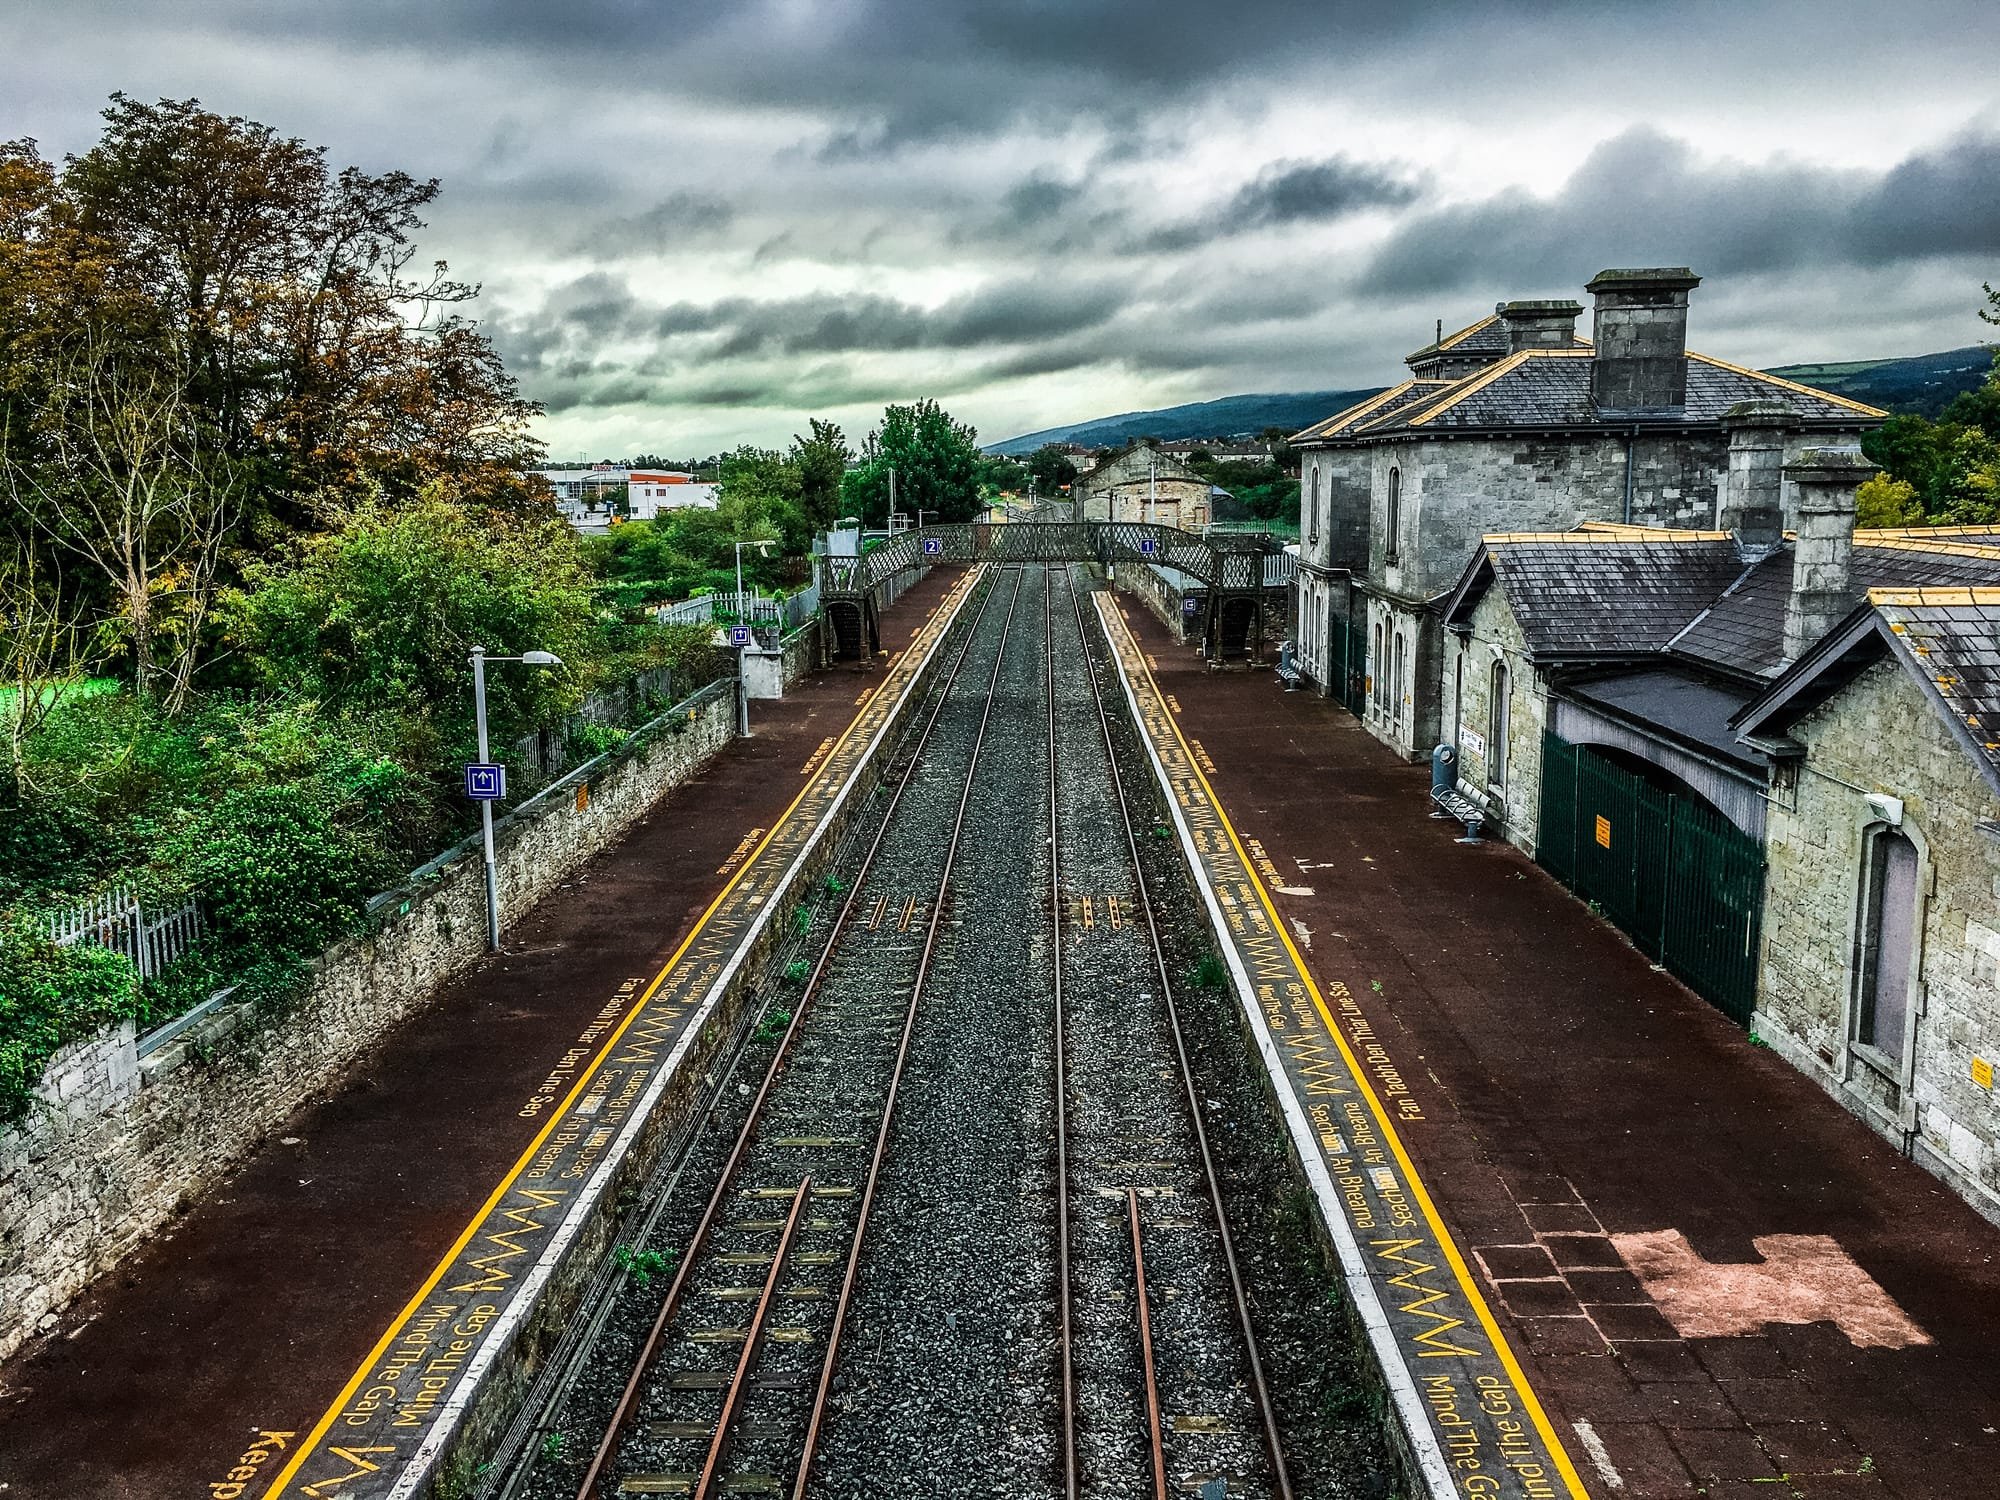 The Clonmel Railway Station